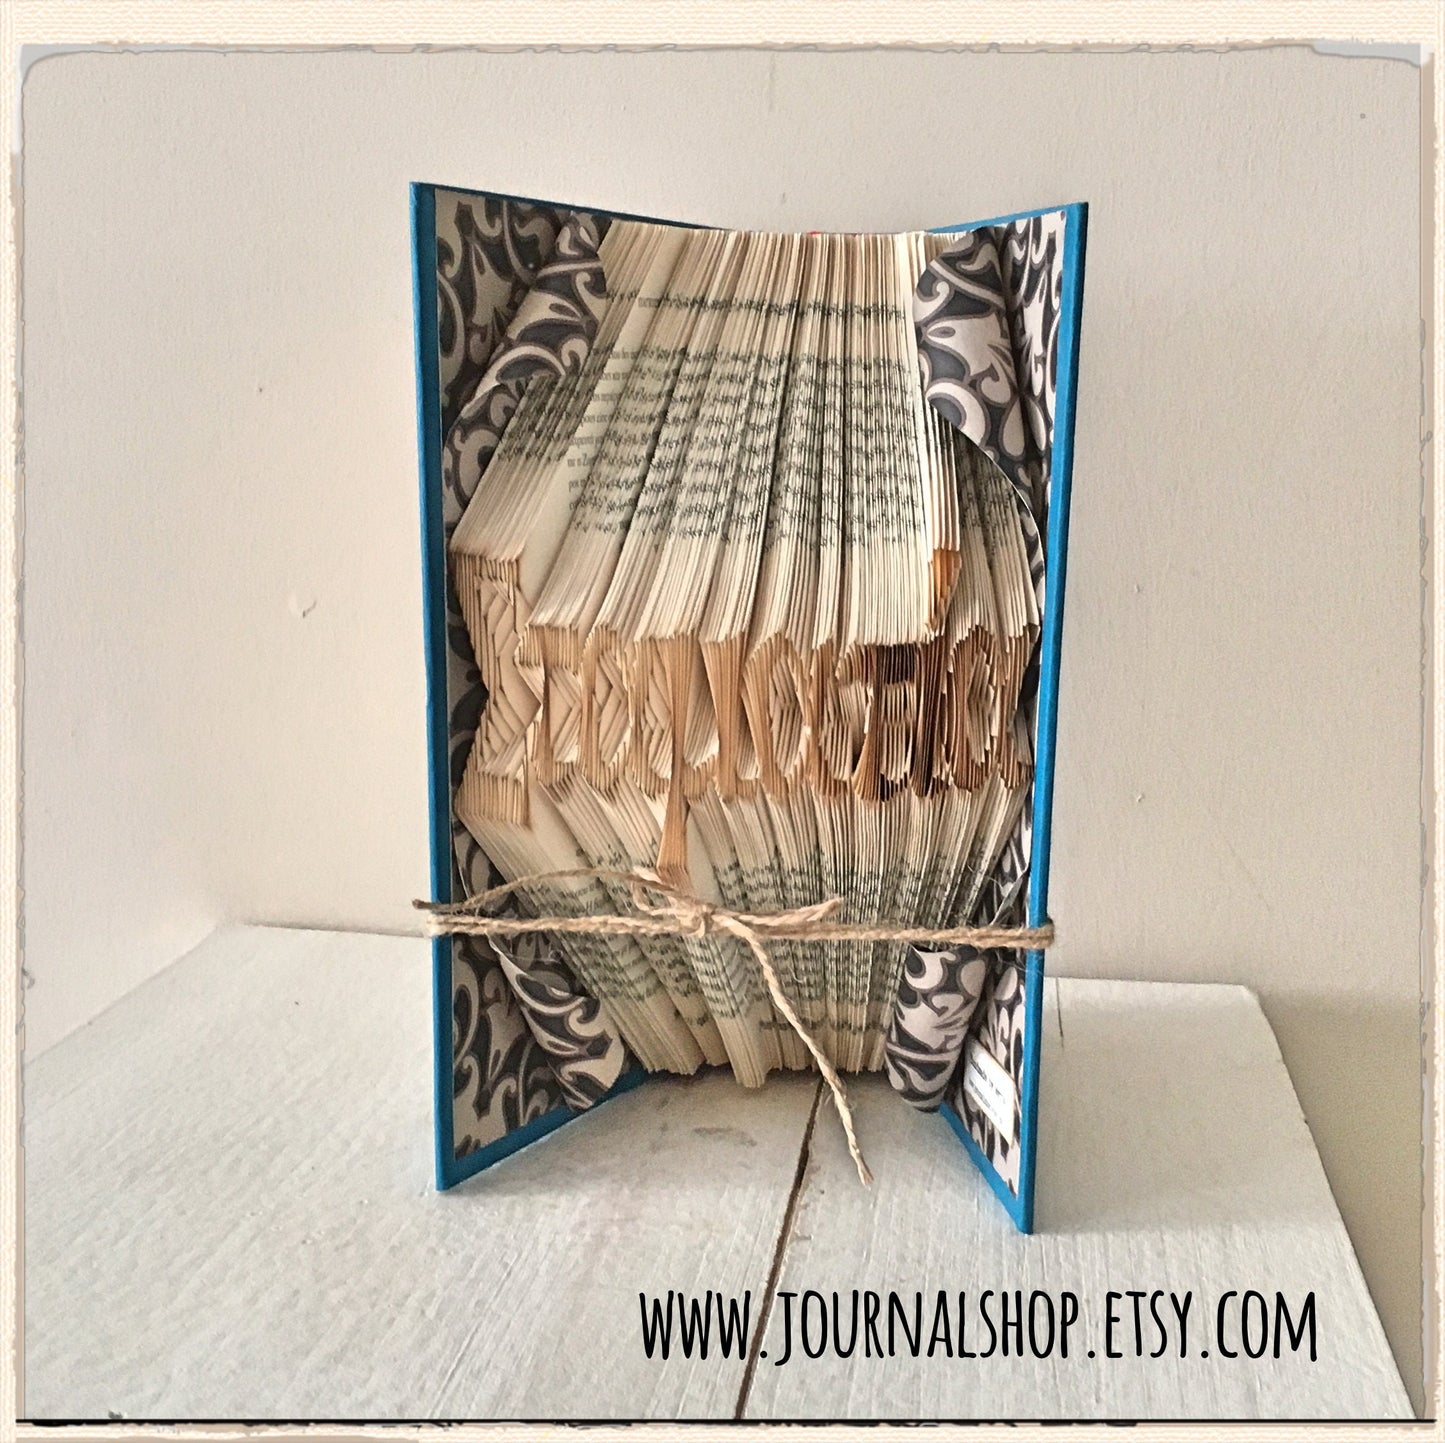 Personalized folded book in Greek, Name Folded in a Vintage Book, bookfolding art in Greek, book art gift, Greek wedding decor book folding